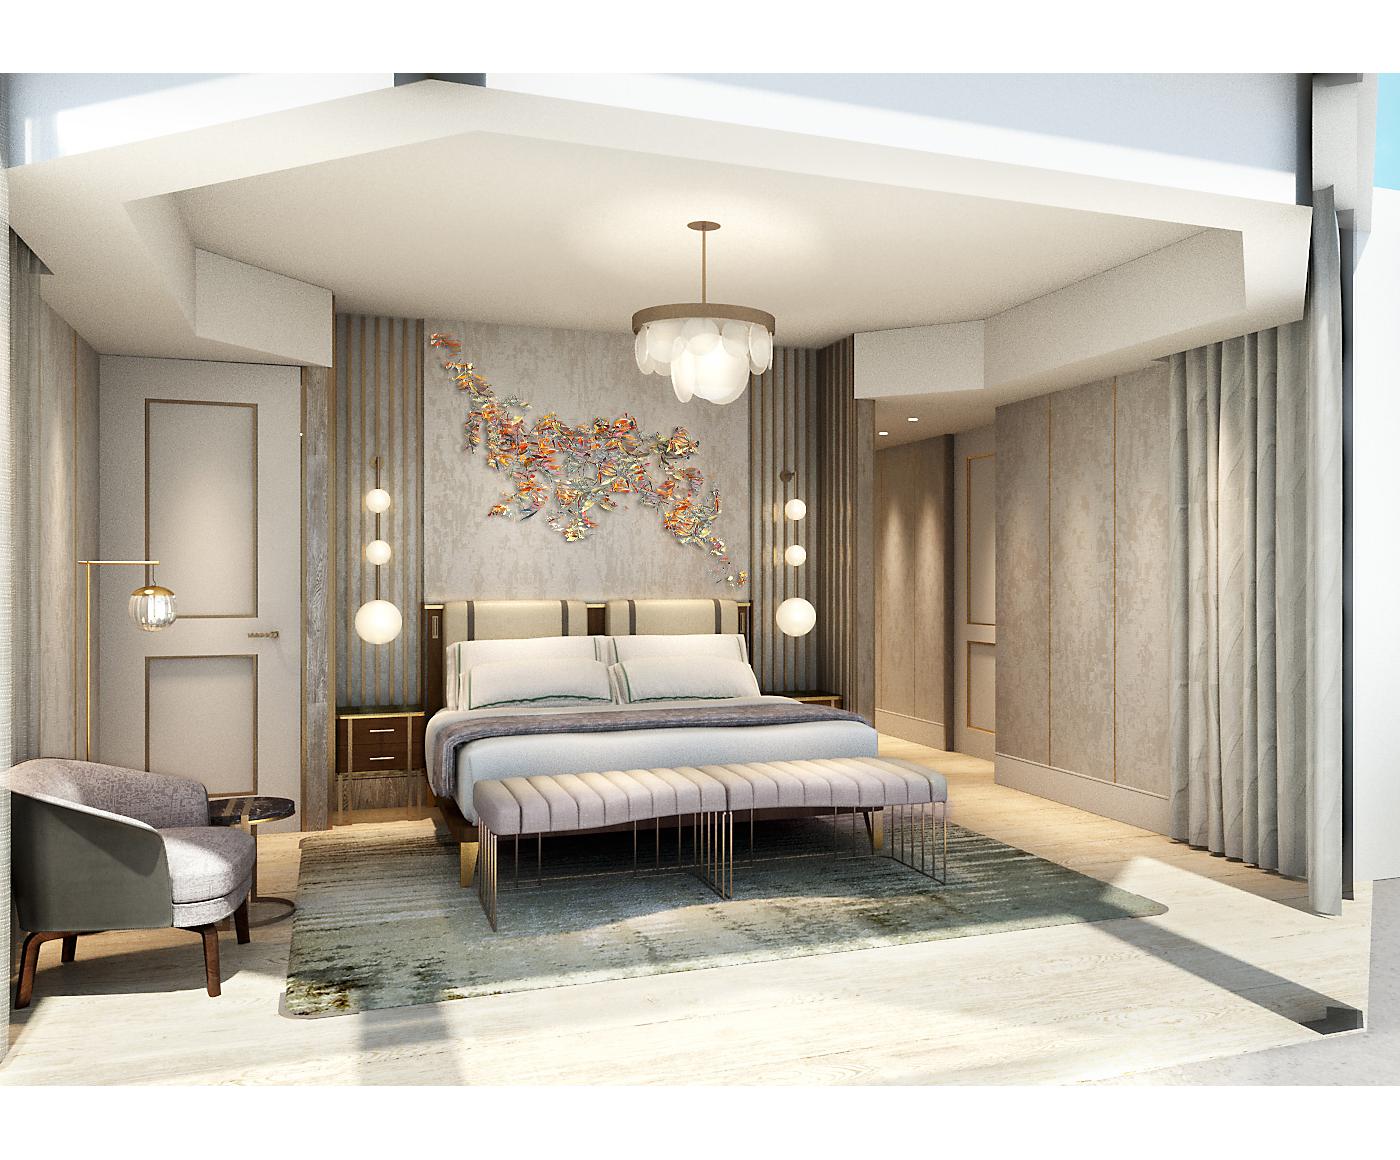 london-2017-rendering-penthouse-suite-master-bedroom